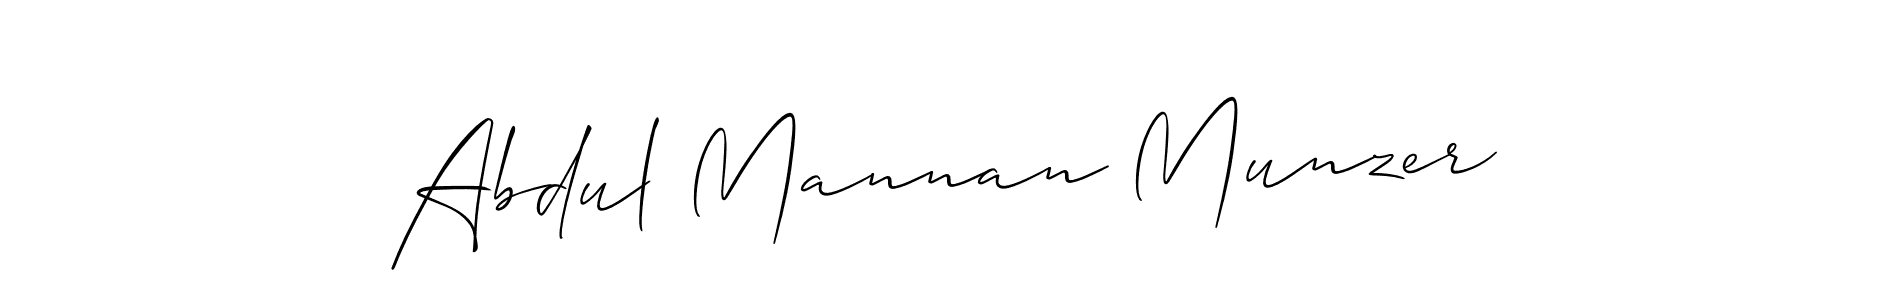 How to Draw Abdul Mannan Munzer signature style? Allison_Script is a latest design signature styles for name Abdul Mannan Munzer. Abdul Mannan Munzer signature style 2 images and pictures png